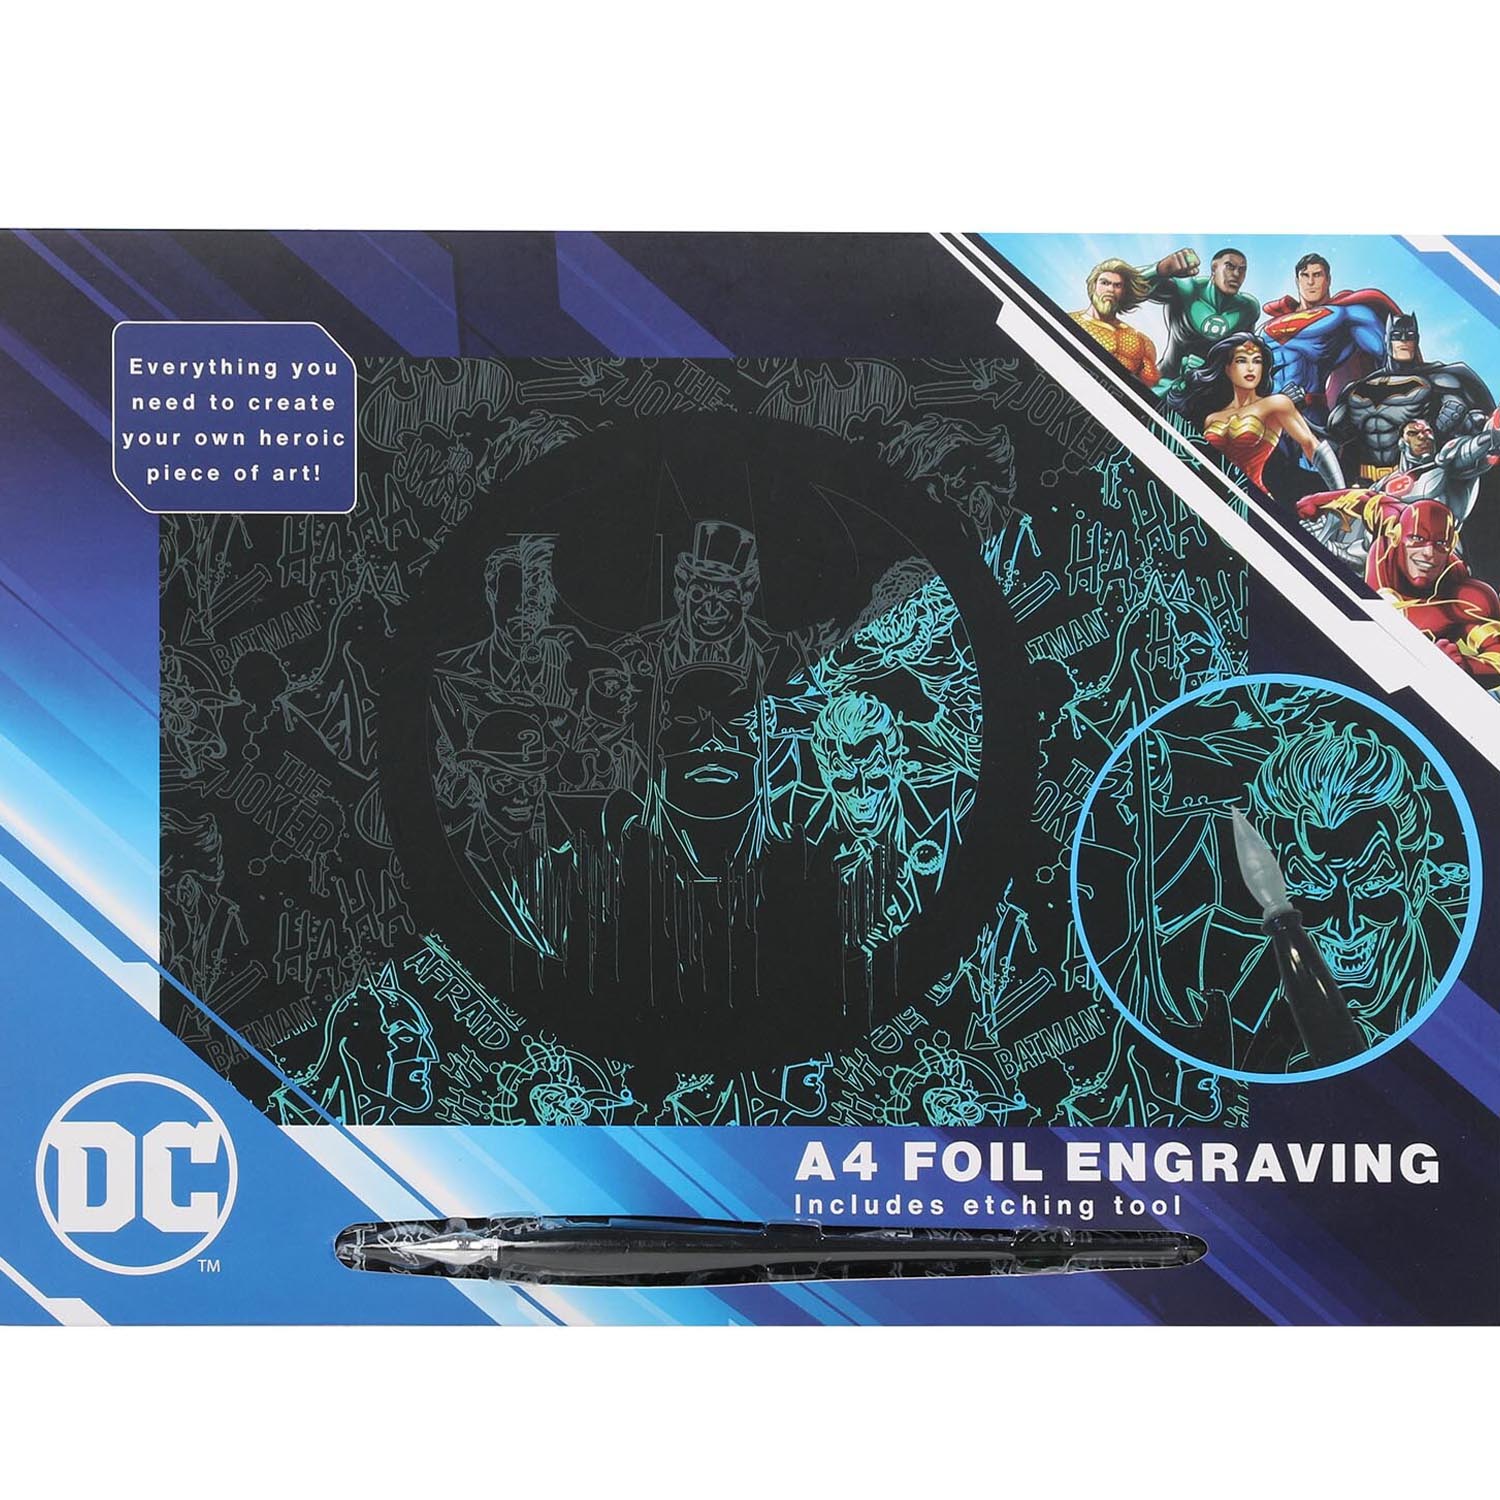 DC Comic Foil Engraving Image 4